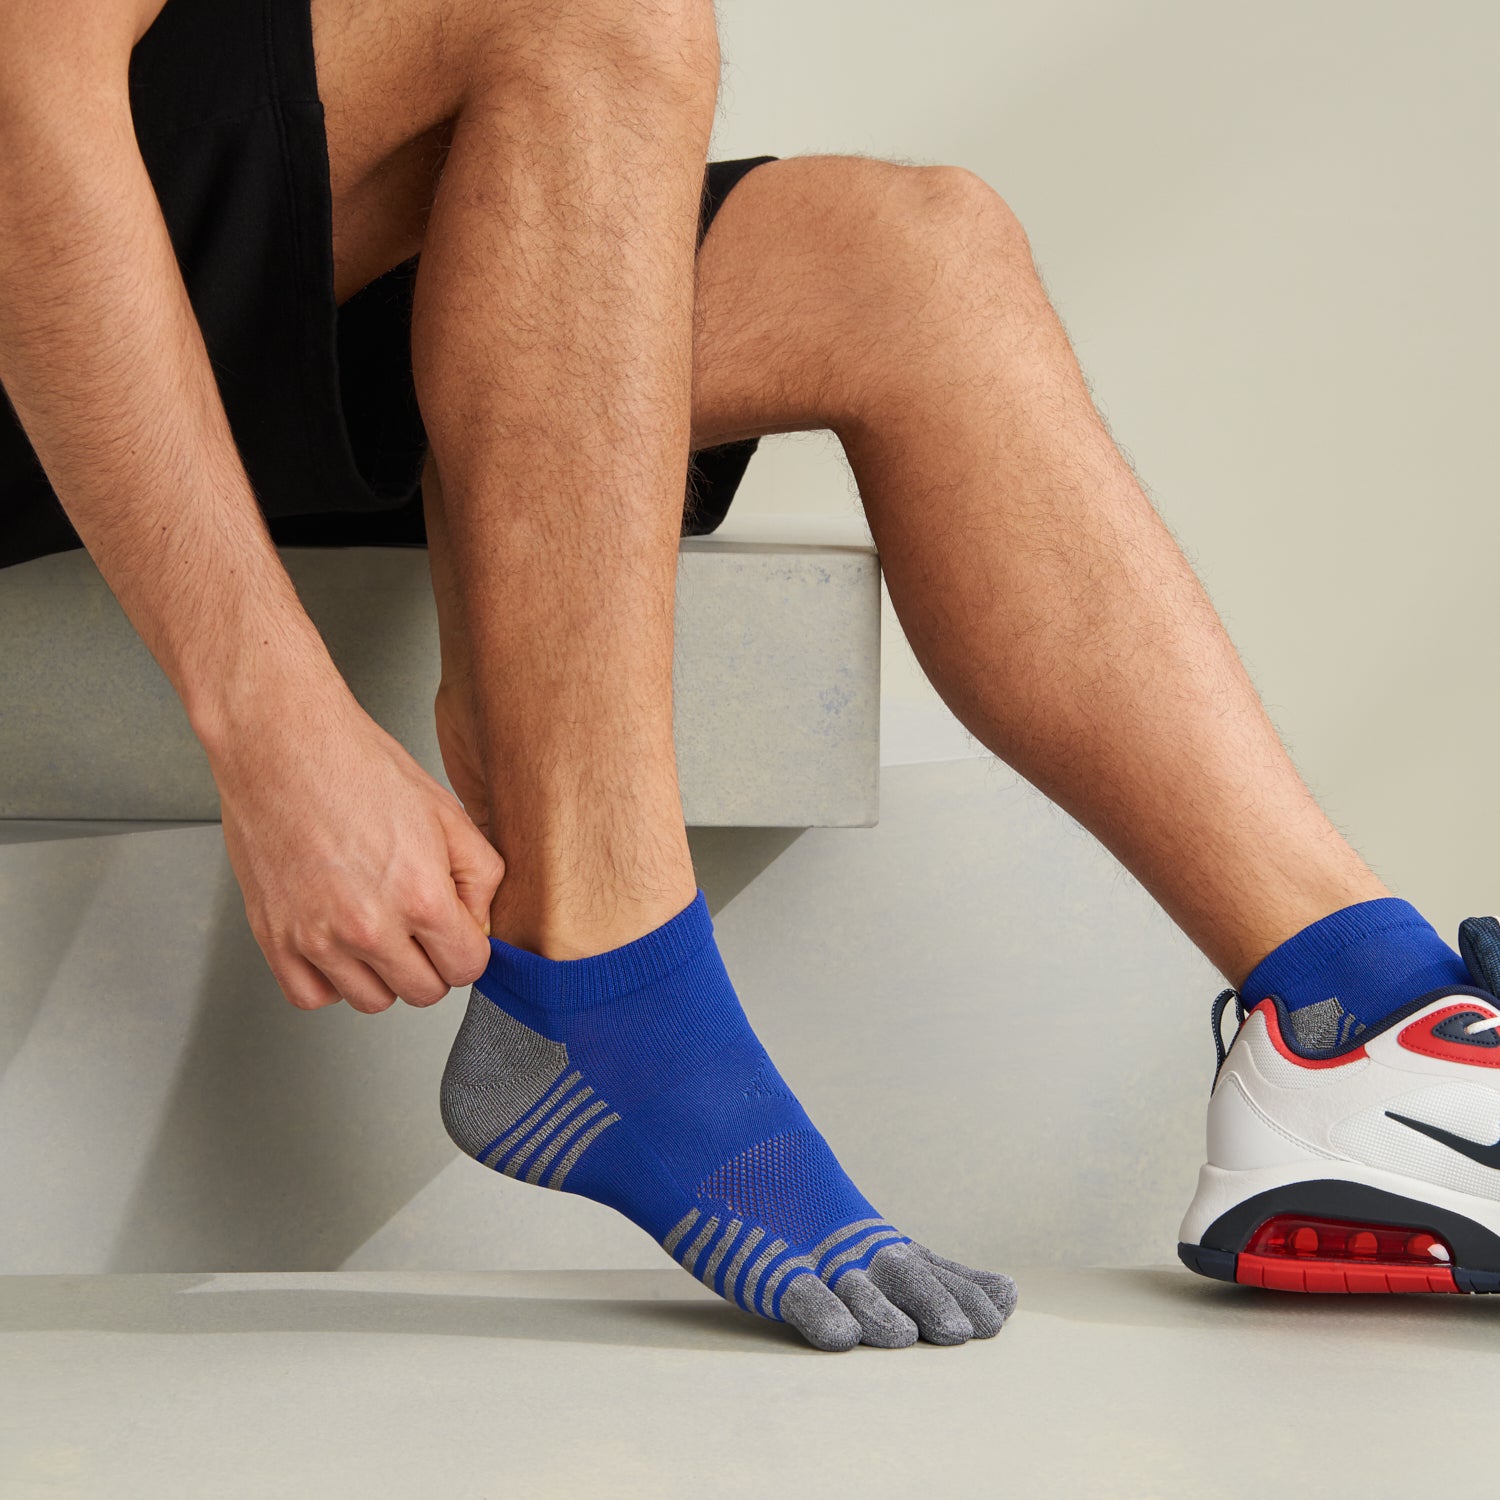 Toe Socks & Tabi Socks, From Funky Tabi to Sports Socks, Sock Dreams